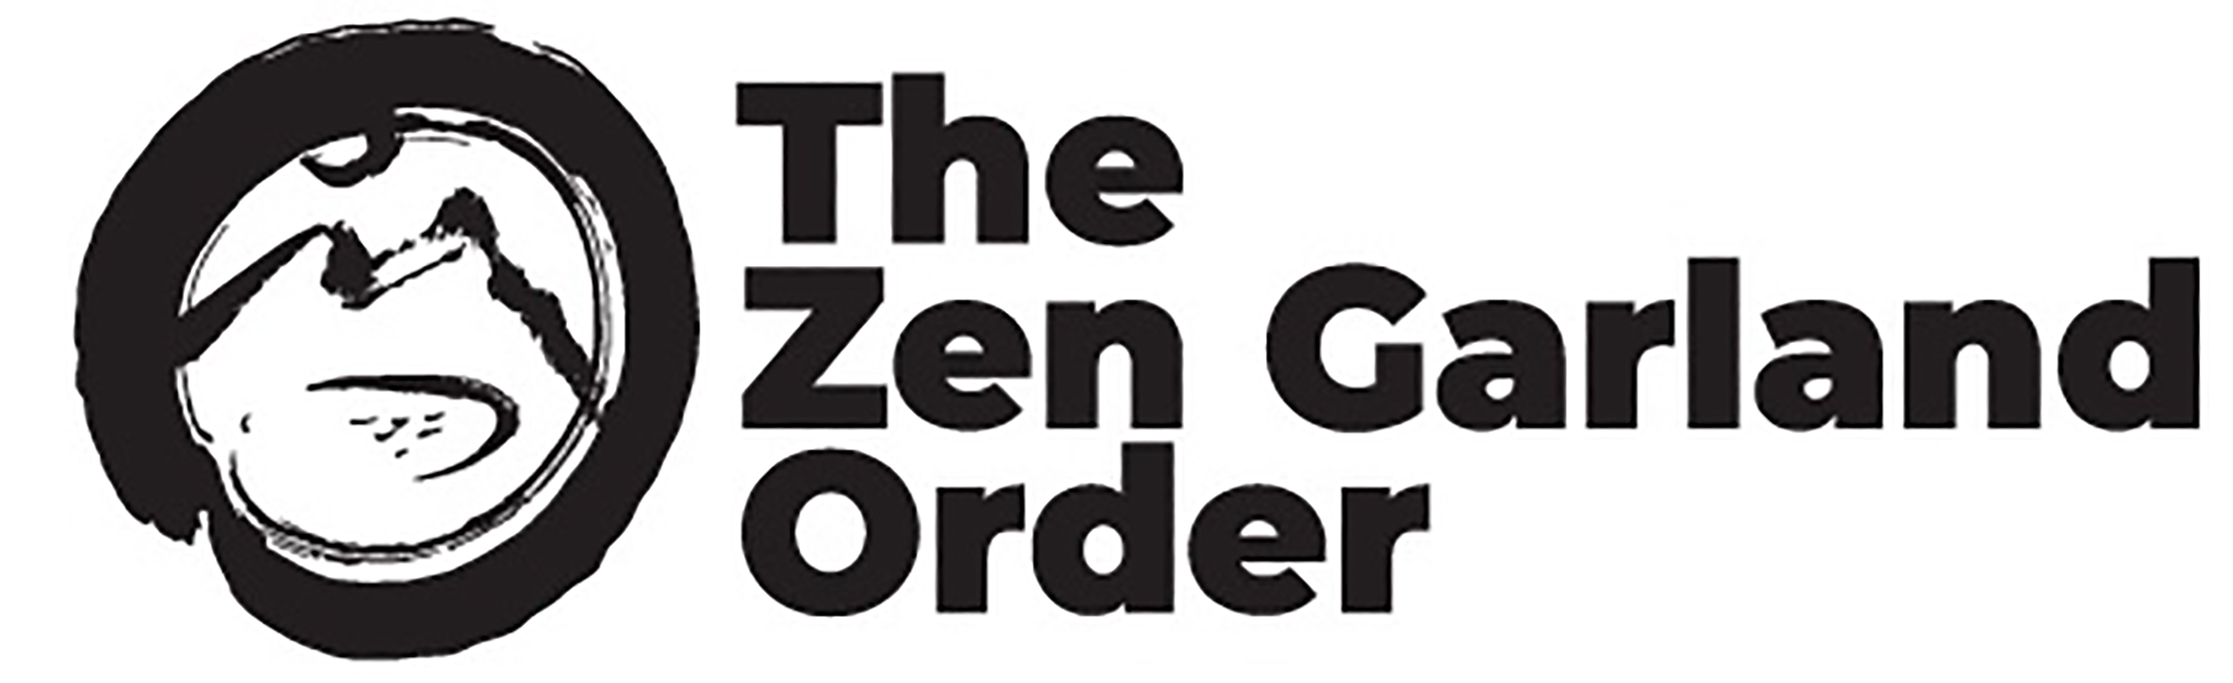 The Zen Garland Order logo